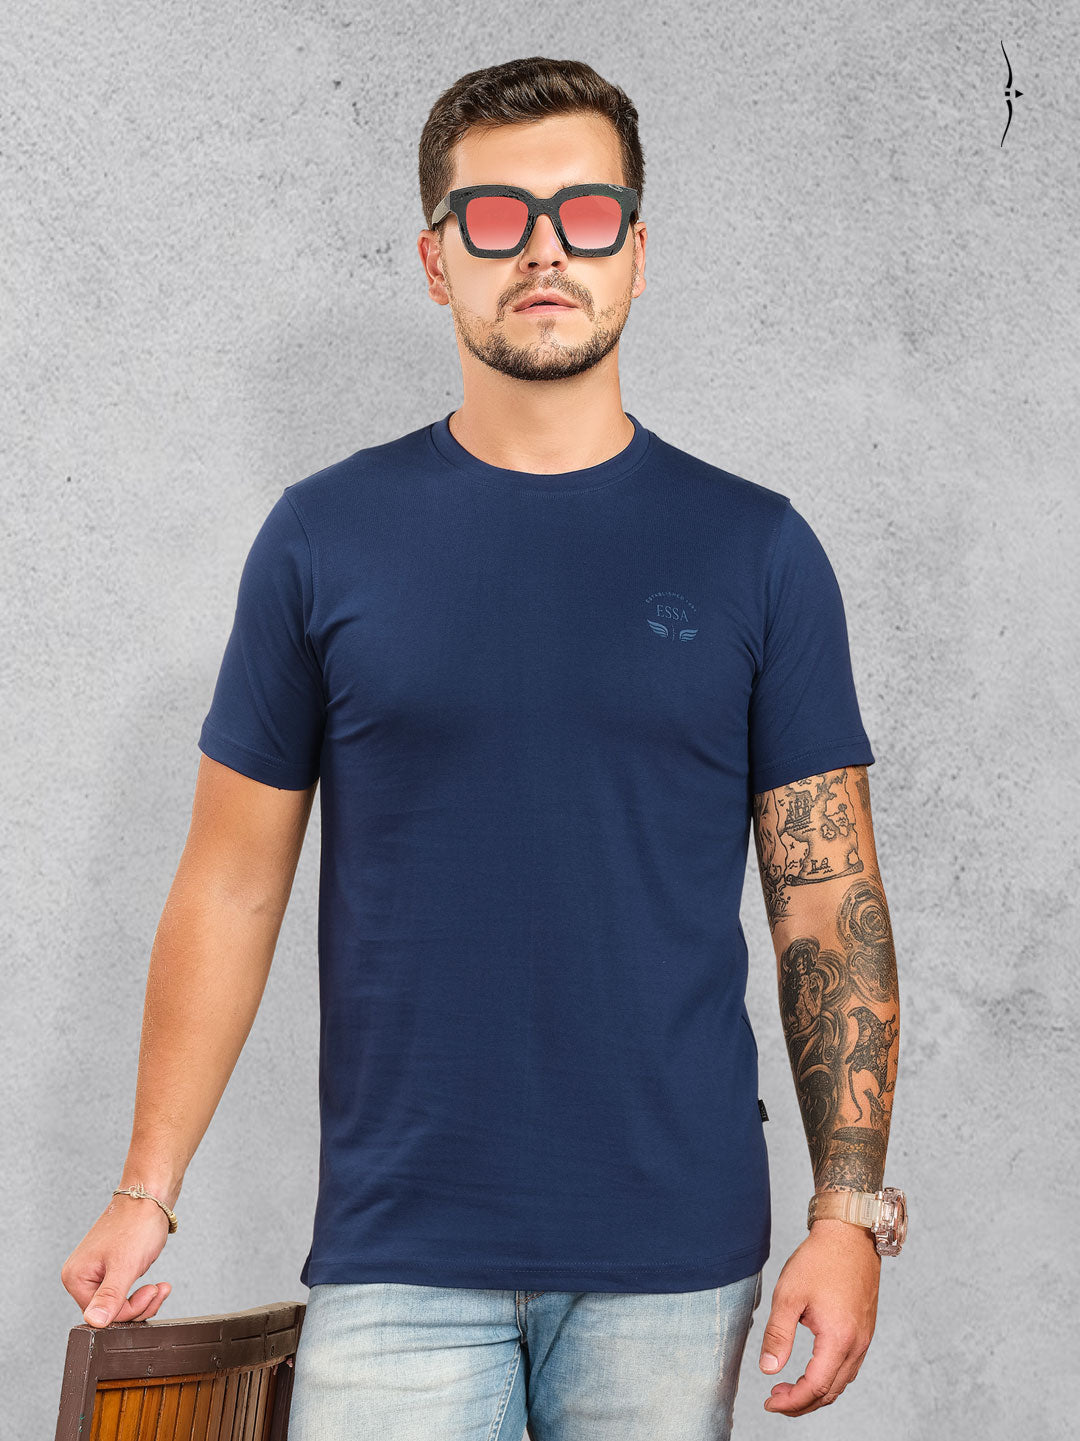 genuine-401 round neck half sleeve navy blue tshirt for men#color_cloud-burst